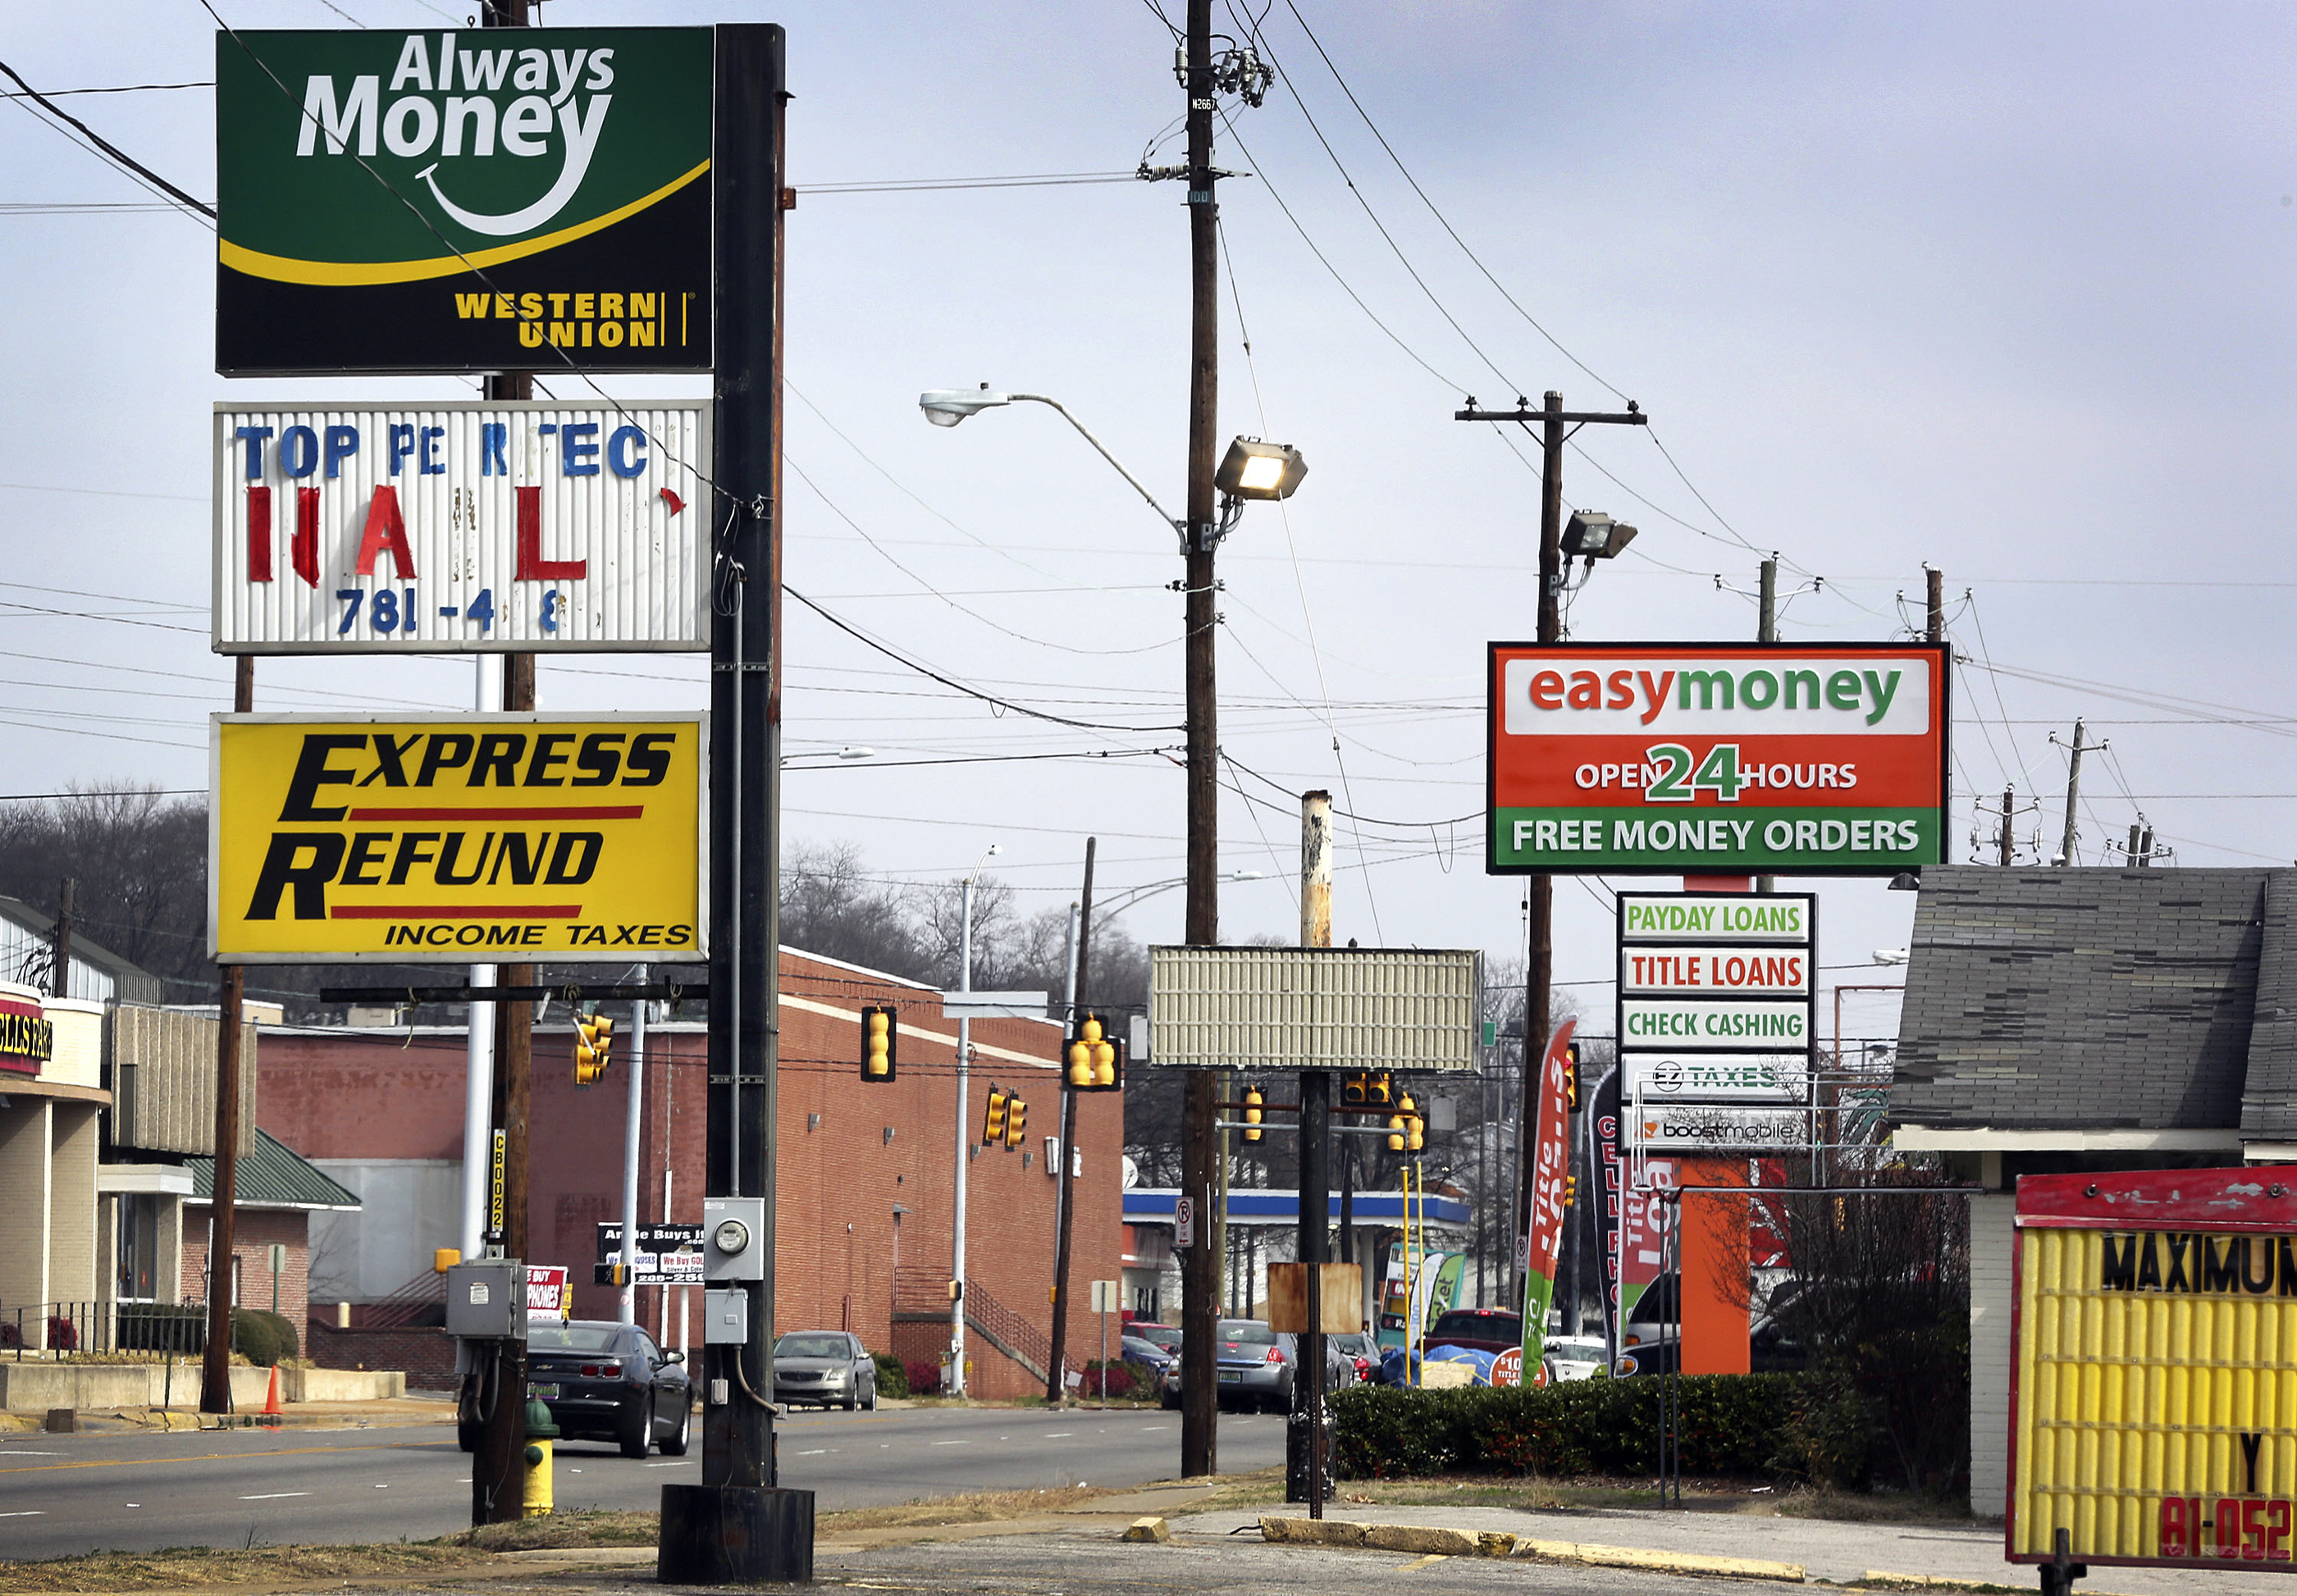 Short-term loan businesses in Birmingham, Alabama.
